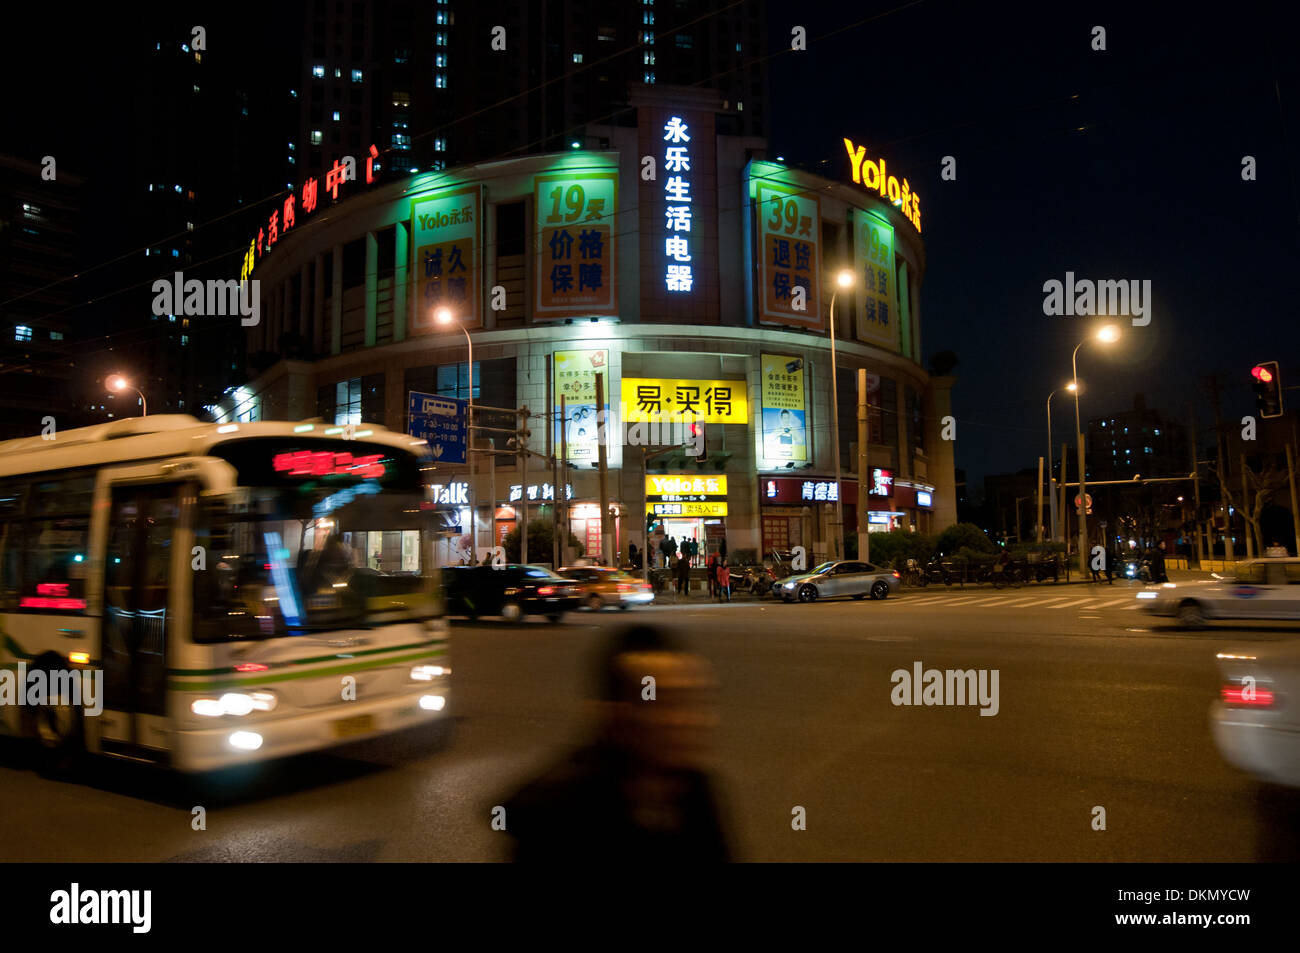 yolo shop in Shanghai, China Stock Photo